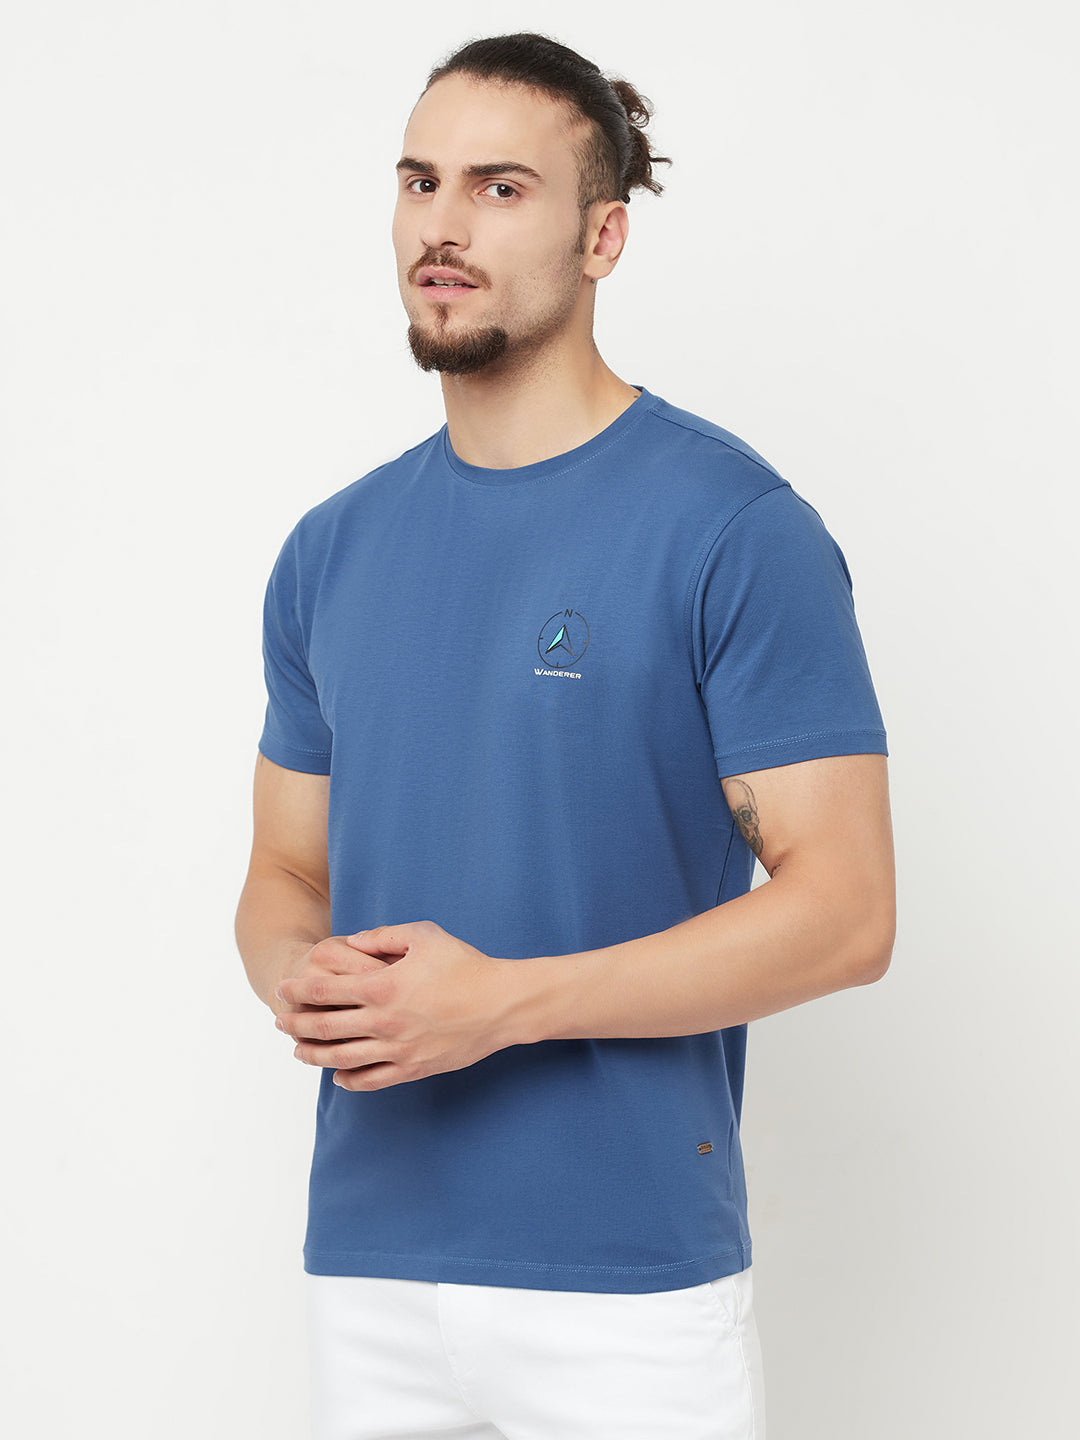 Blue Round Neck T-Shirt - Men T-Shirts